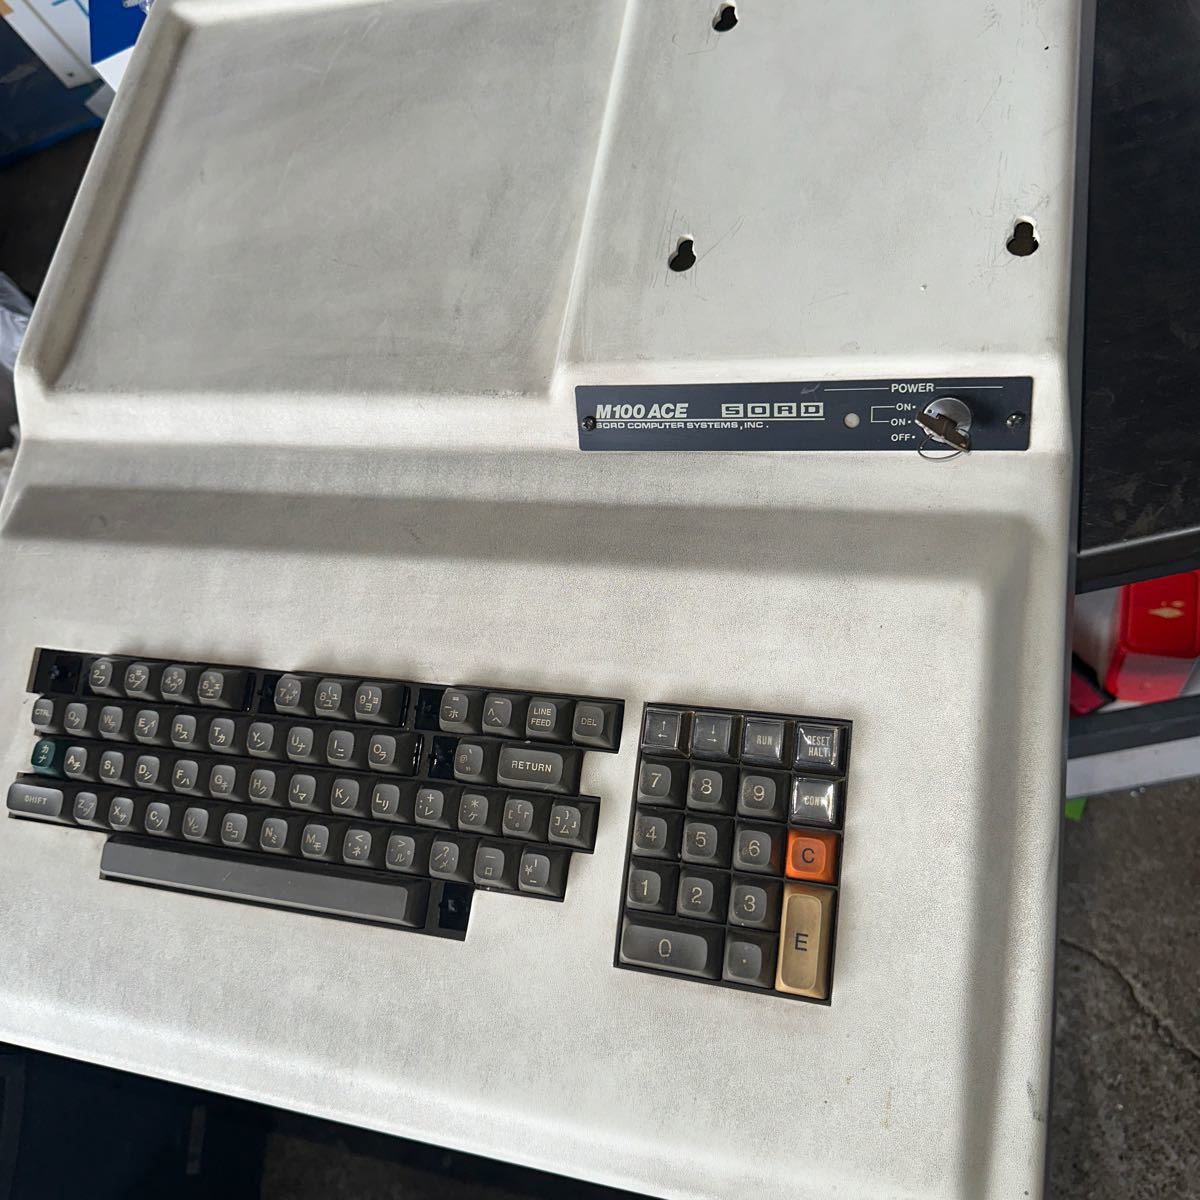 「2FT62」SORD M100ACE パソコンキーボード ホーム コンピューター 用 現状品 希少 レア 昭和レトロ キーボード本体のみ 現状出品の画像4